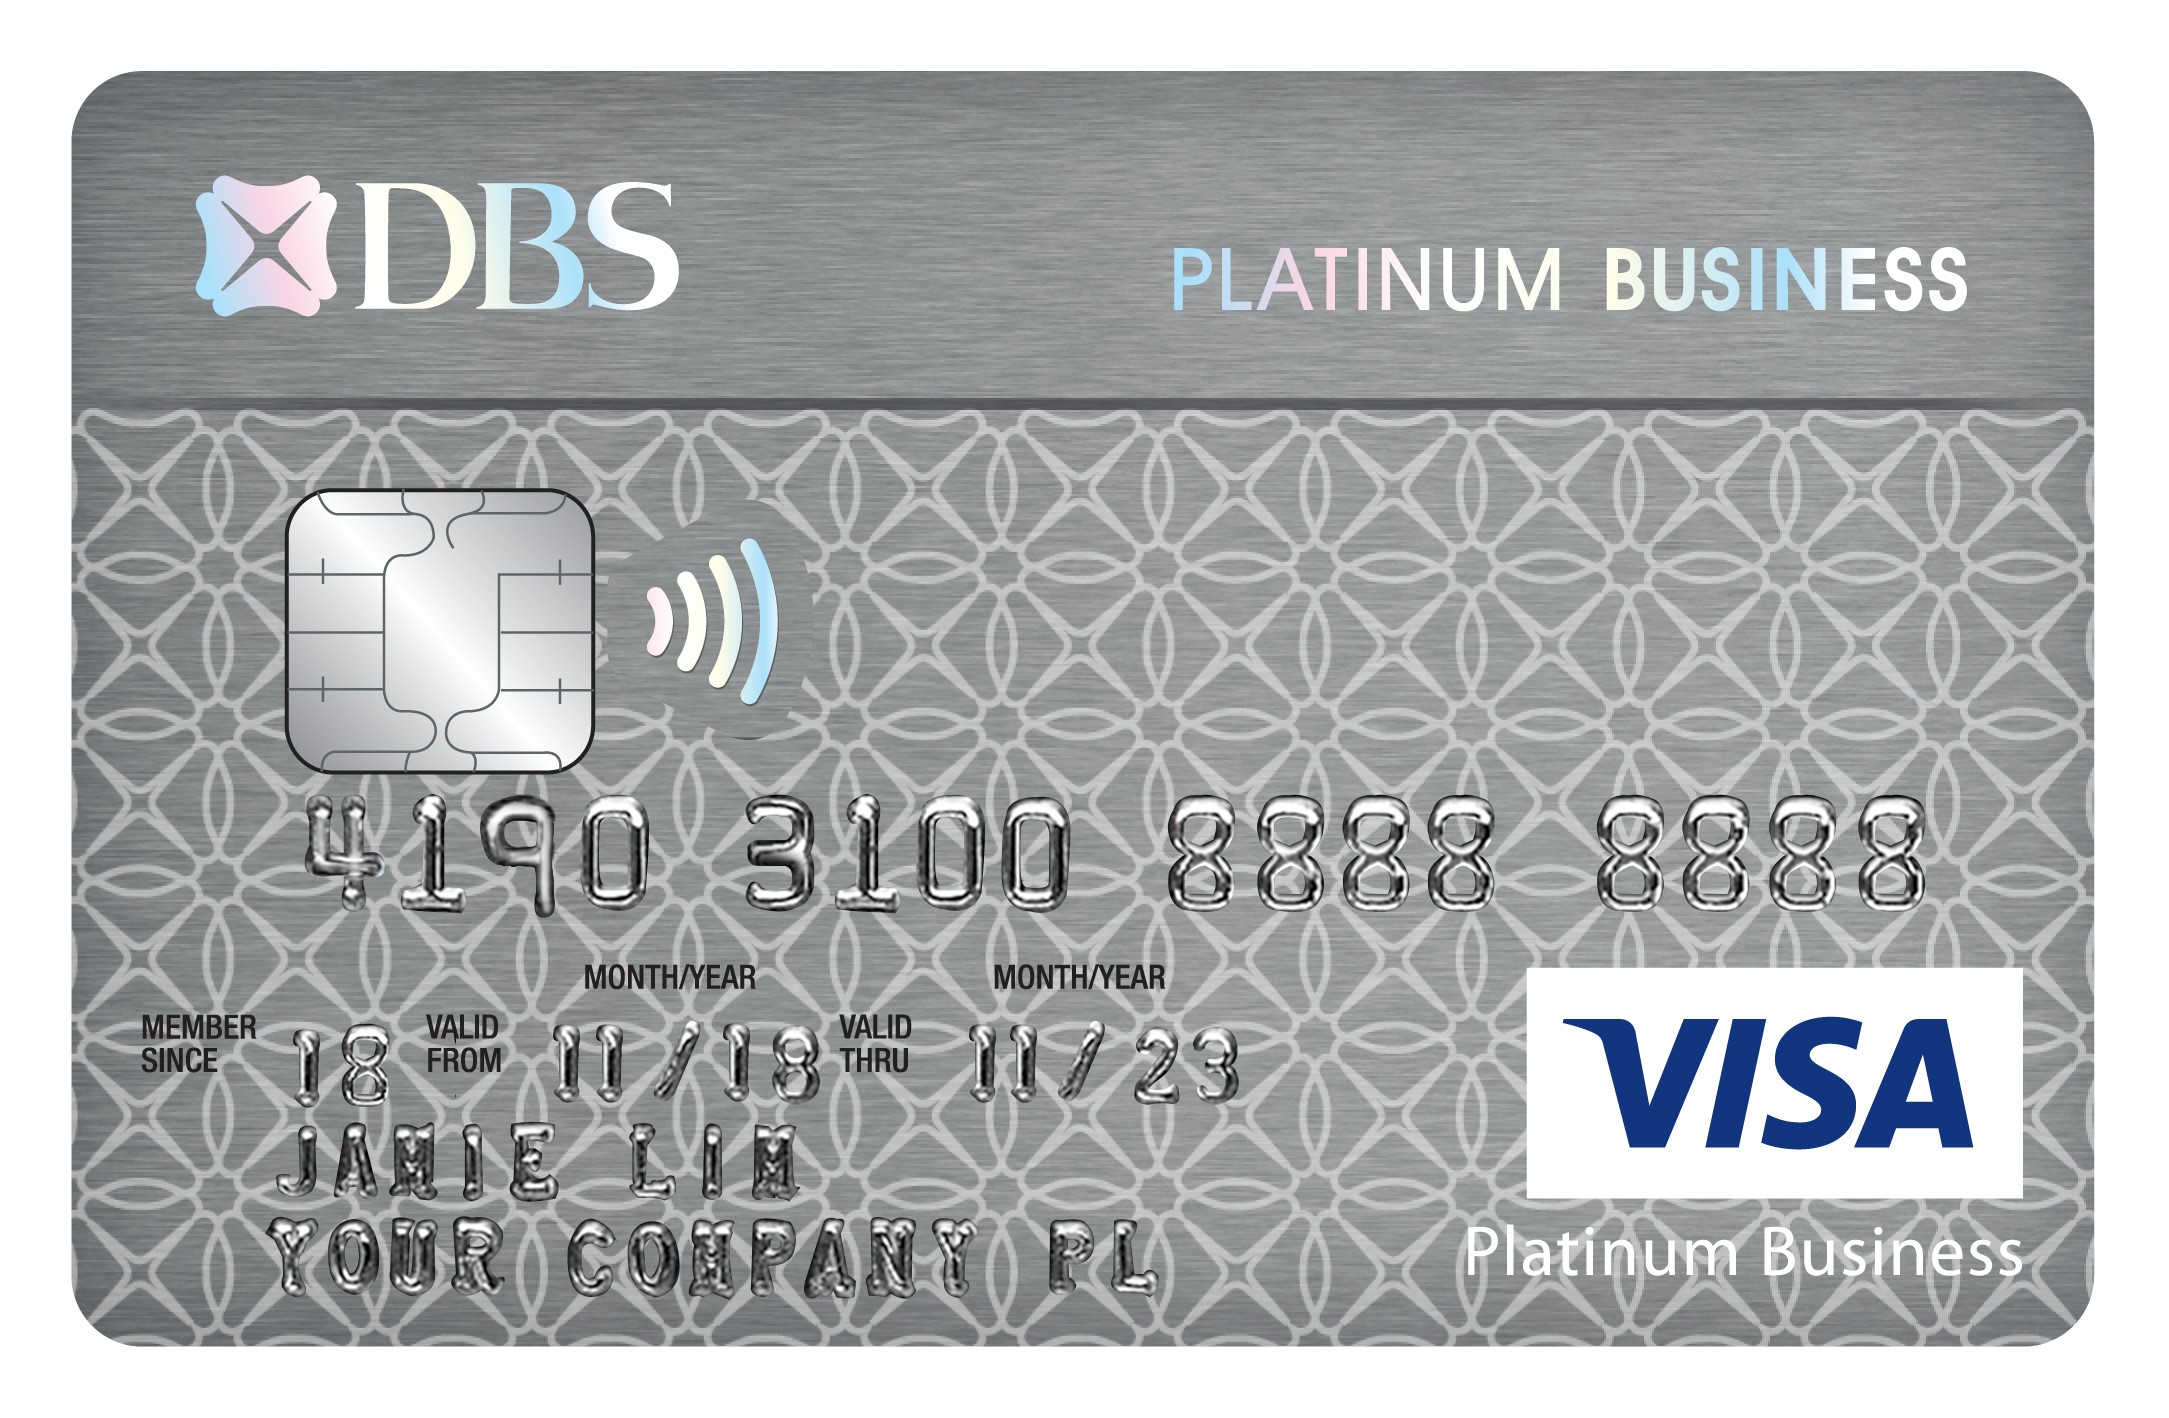 DBS Platinum Business Card